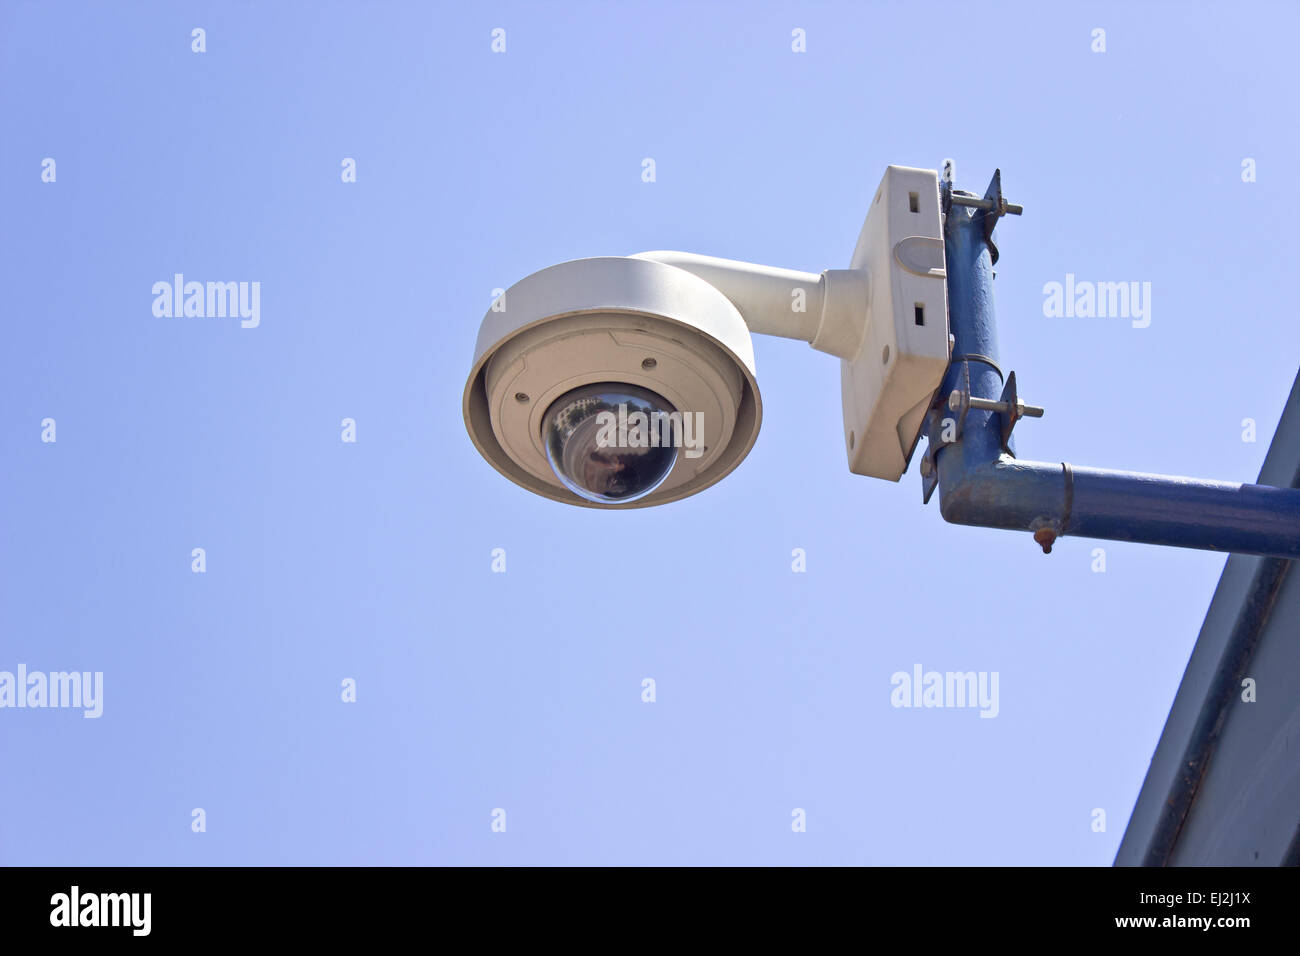 Hi-tech dome type surveillance camera over blue sky Stock Photo